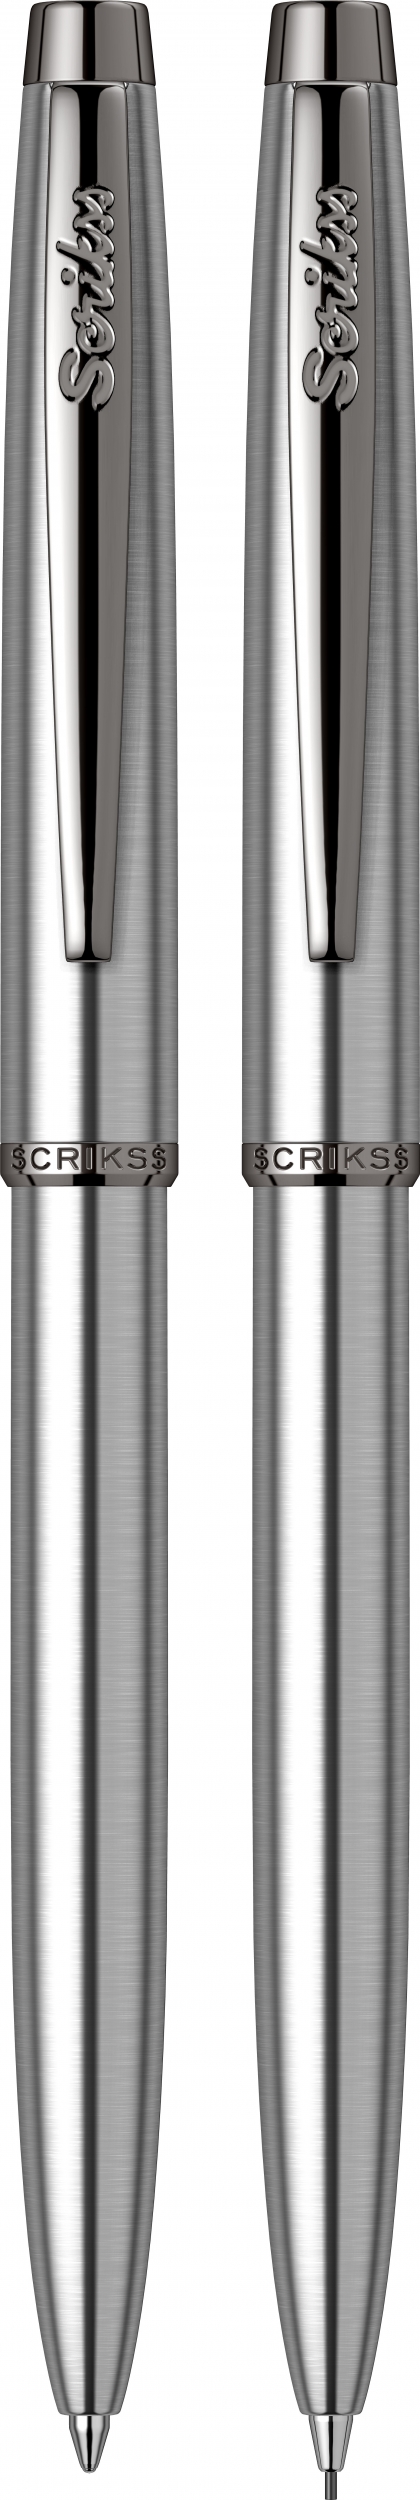 Комплект Scrikss Автоматична х-ка+Автоматичен молив Prestige, модел 82246, цвят Хром